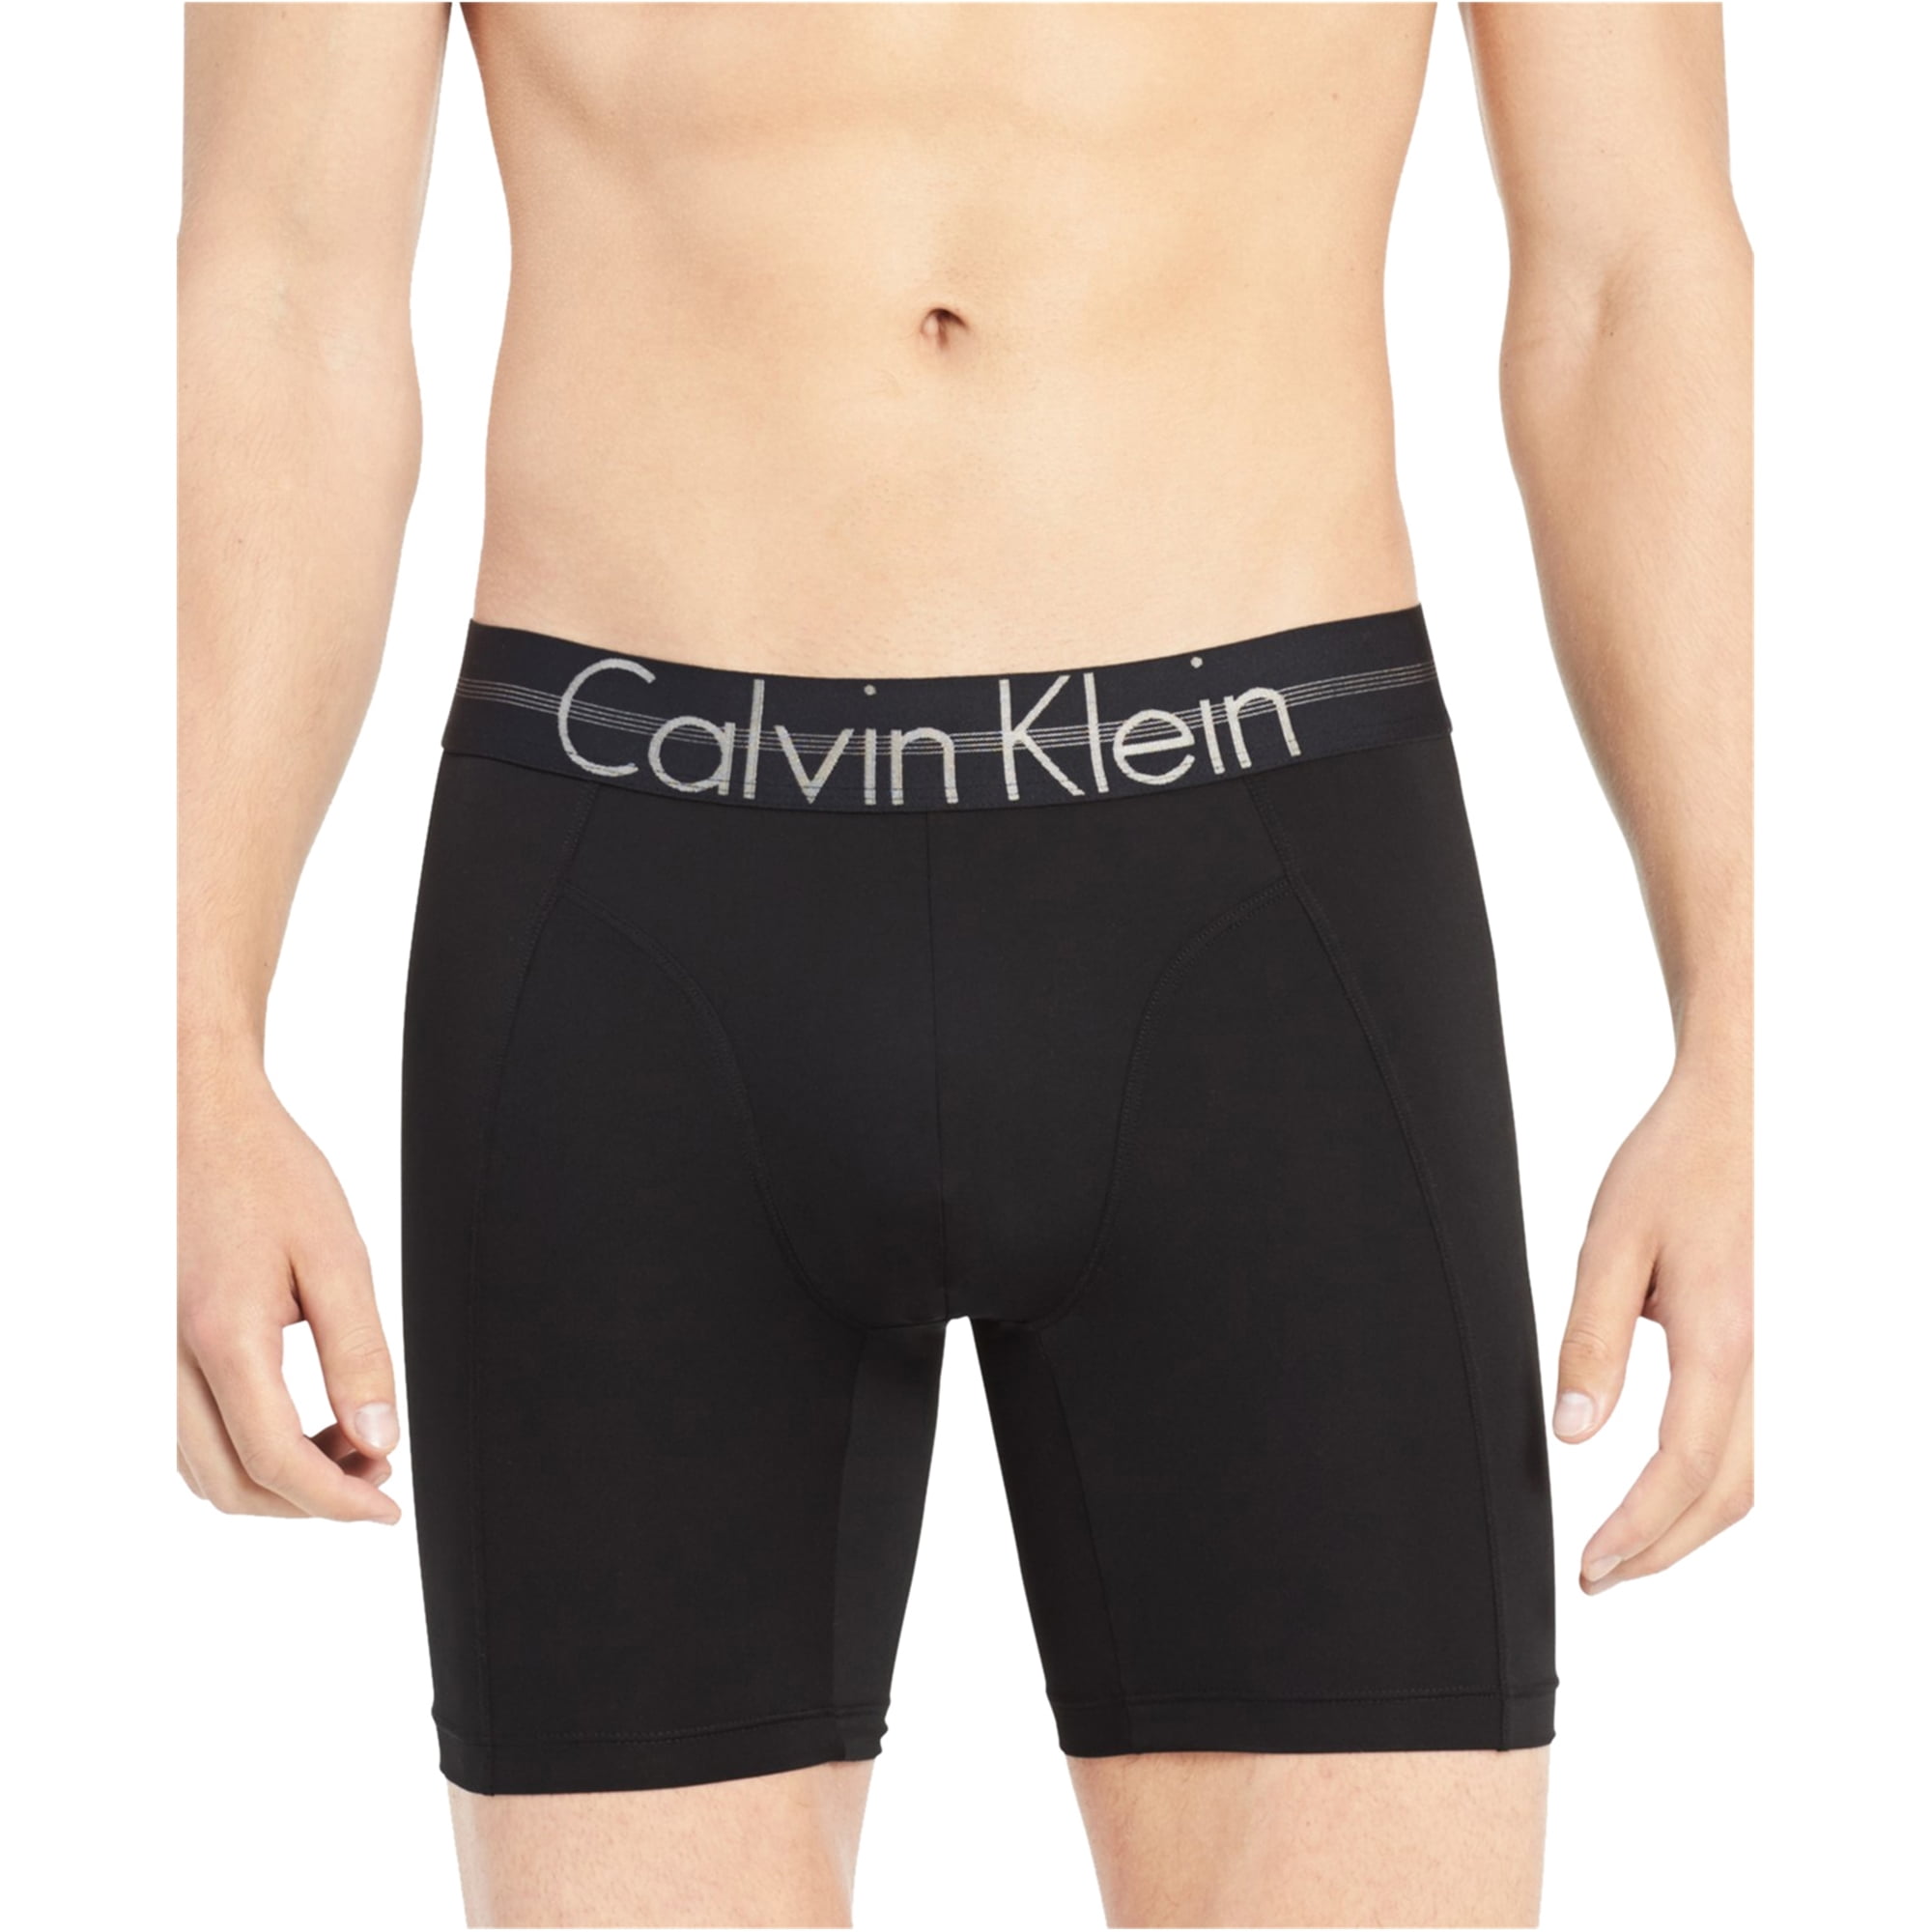 Calvin Klein][ロゴ スウェットシャツ] (Calvin Klein/スウェット